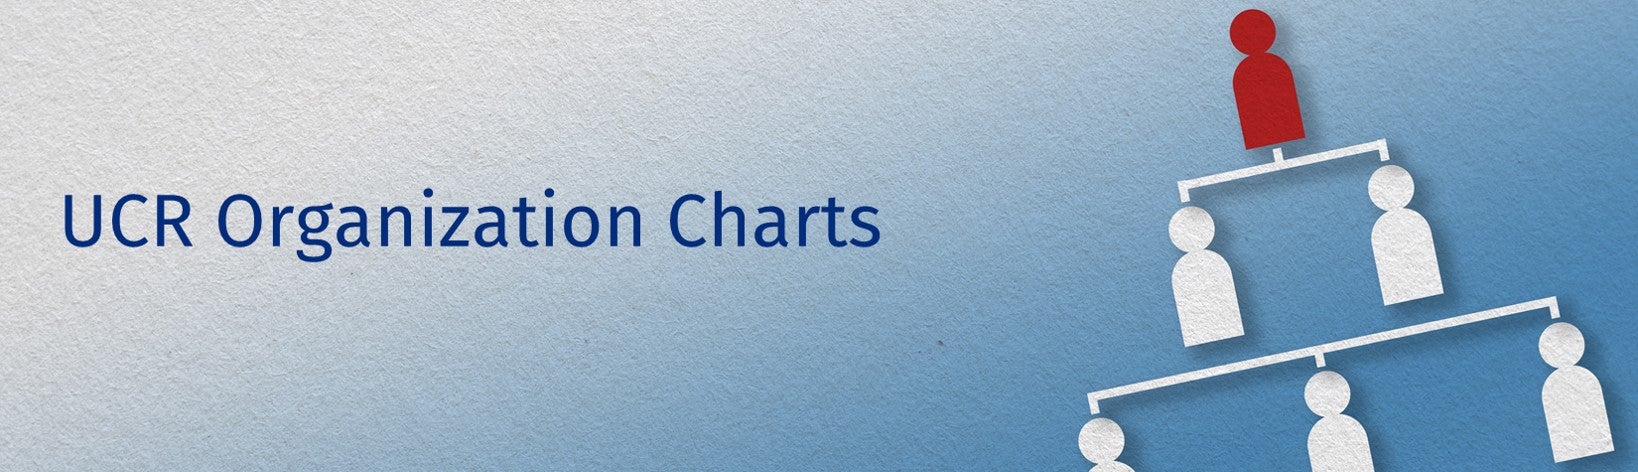 Organization Chart banner image